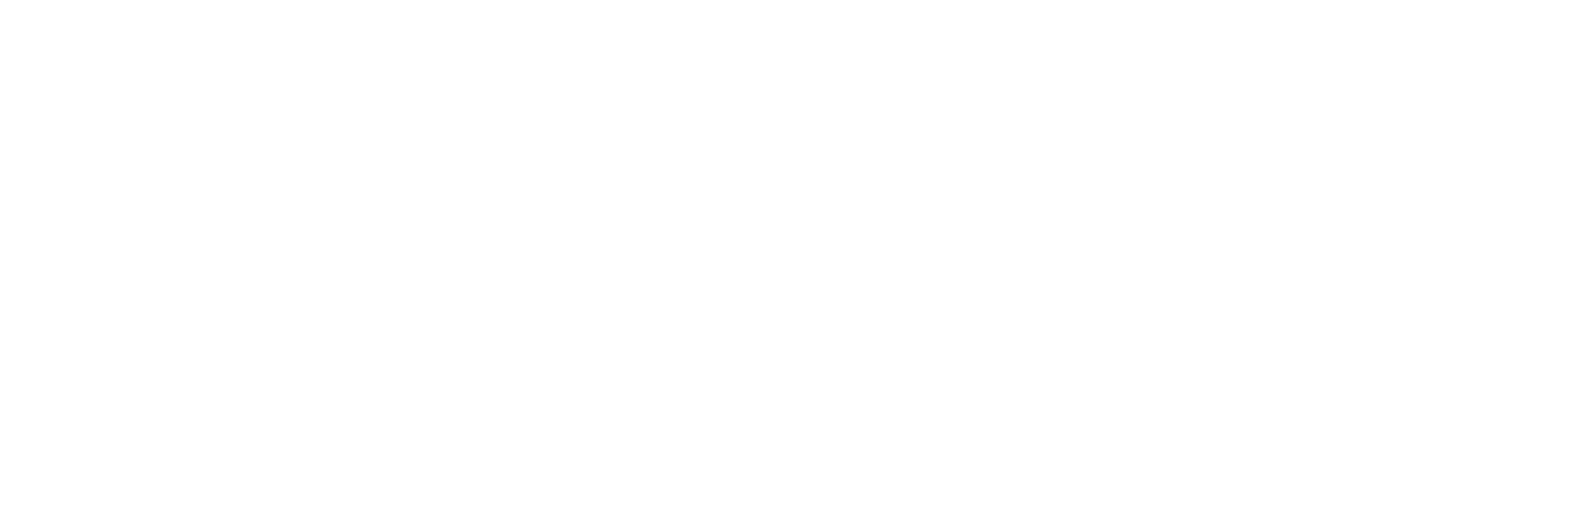 Pick n Pay Stores logo pour fonds sombres (PNG transparent)